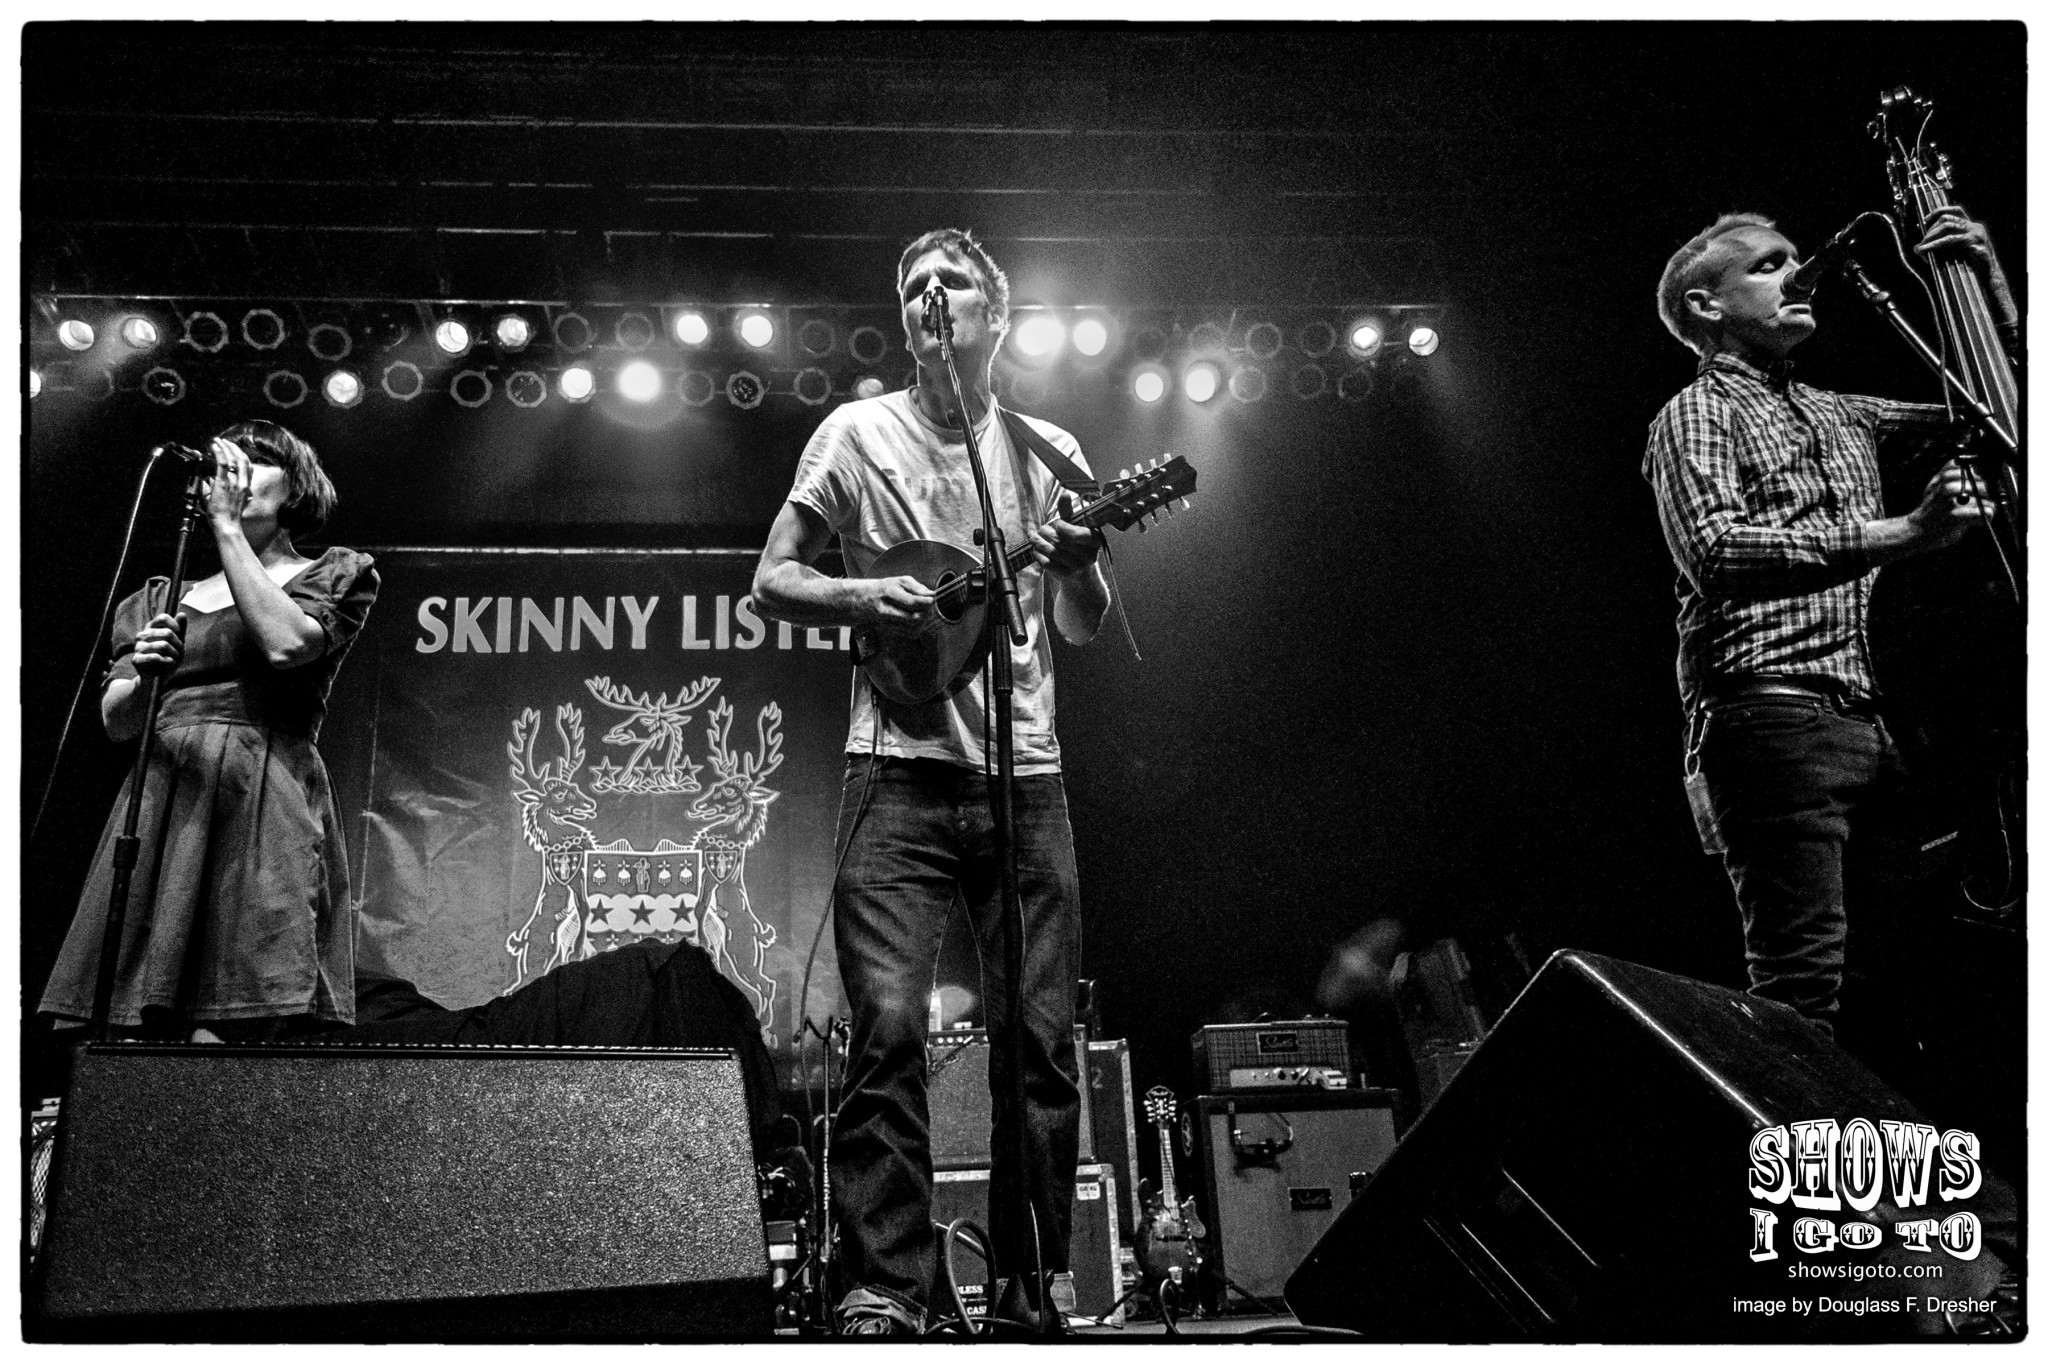 Skinny Lister opens for Flogging Molly at the Roseland Ballroom, February 17, 2014